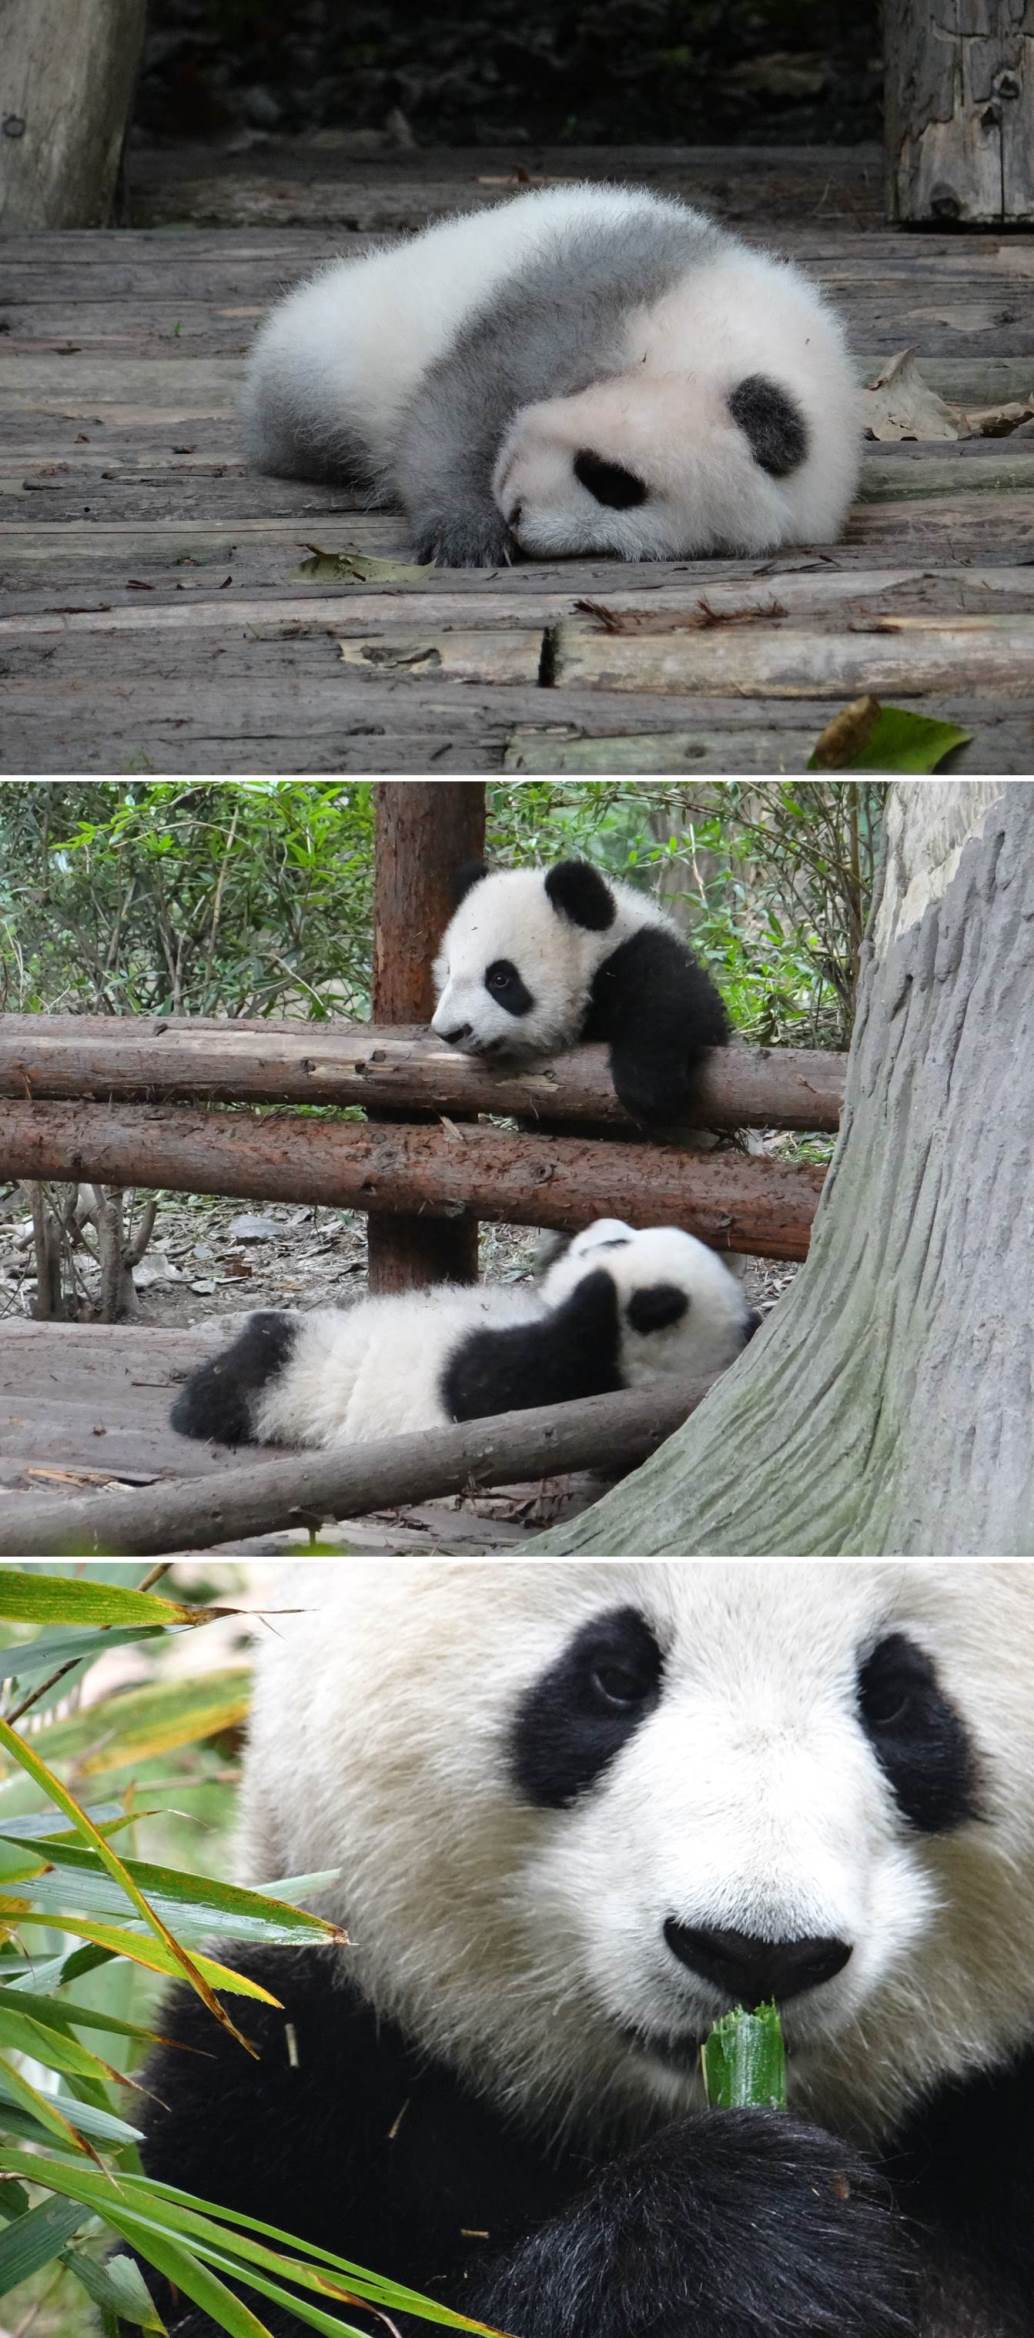 Chengdu pandas